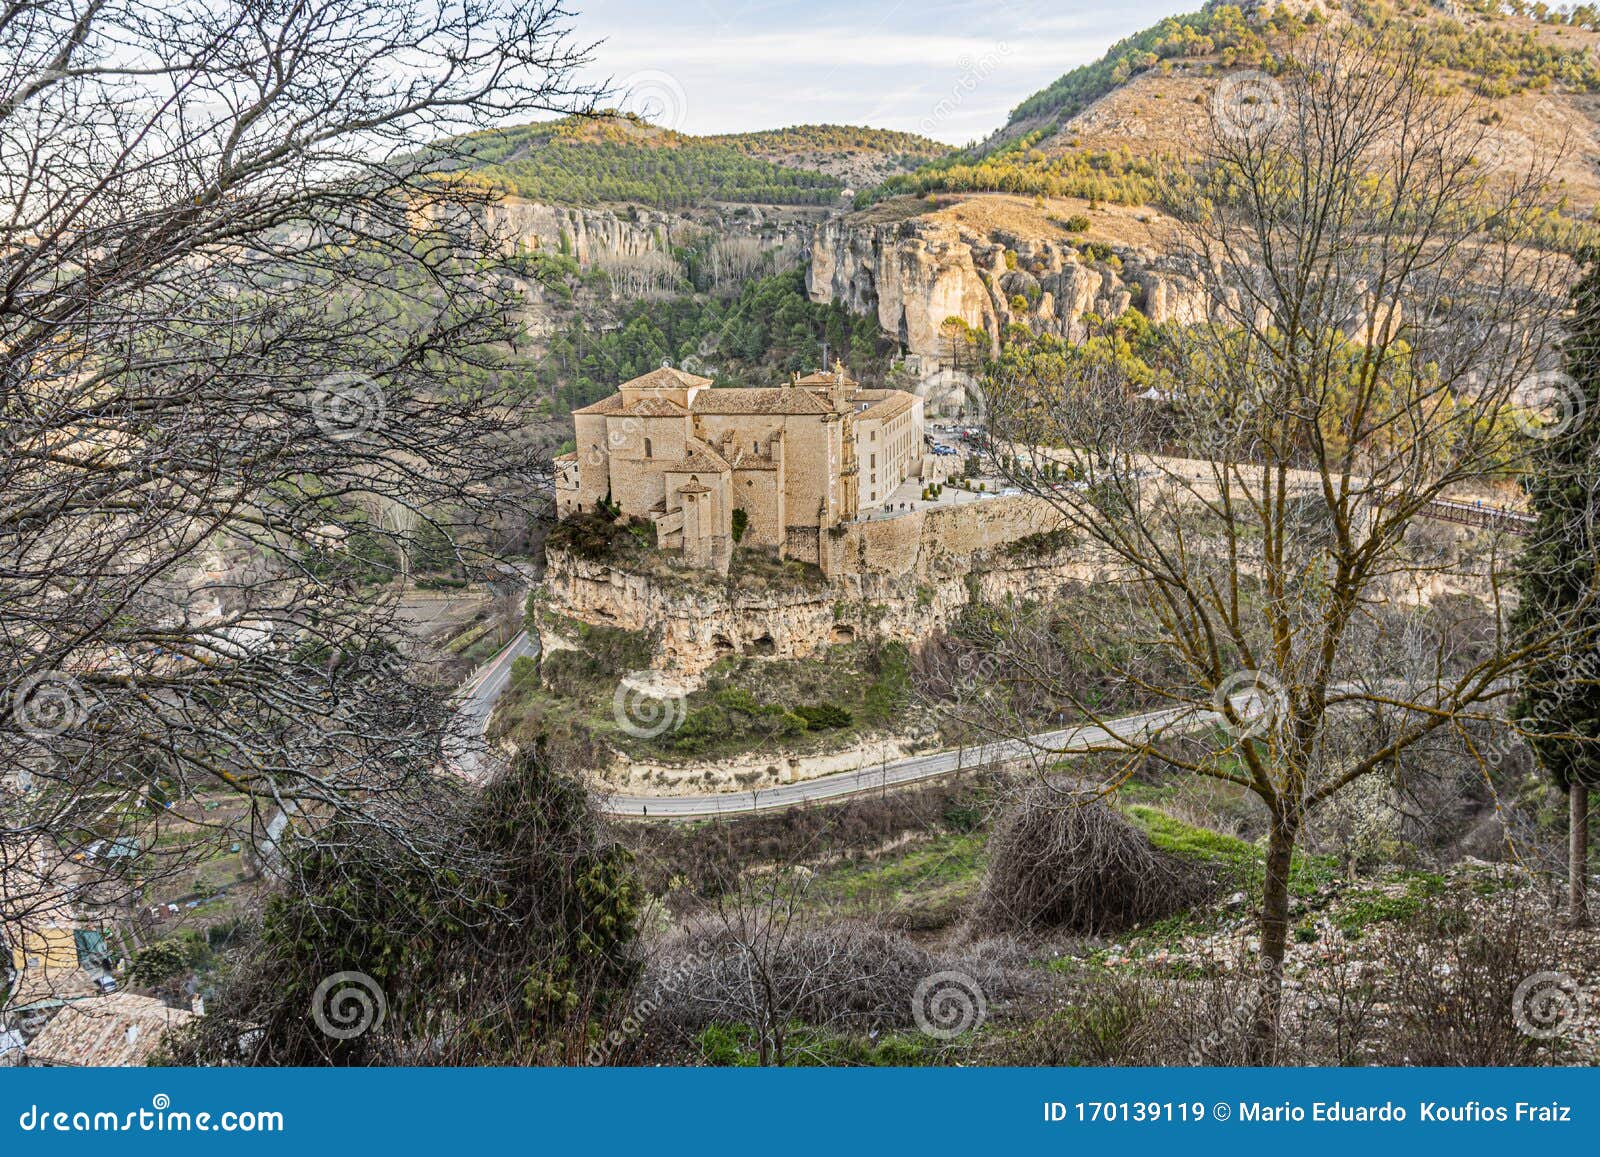 huecar river gorge and old monastery of san pablo. europe spain castilla la mancha cuenca